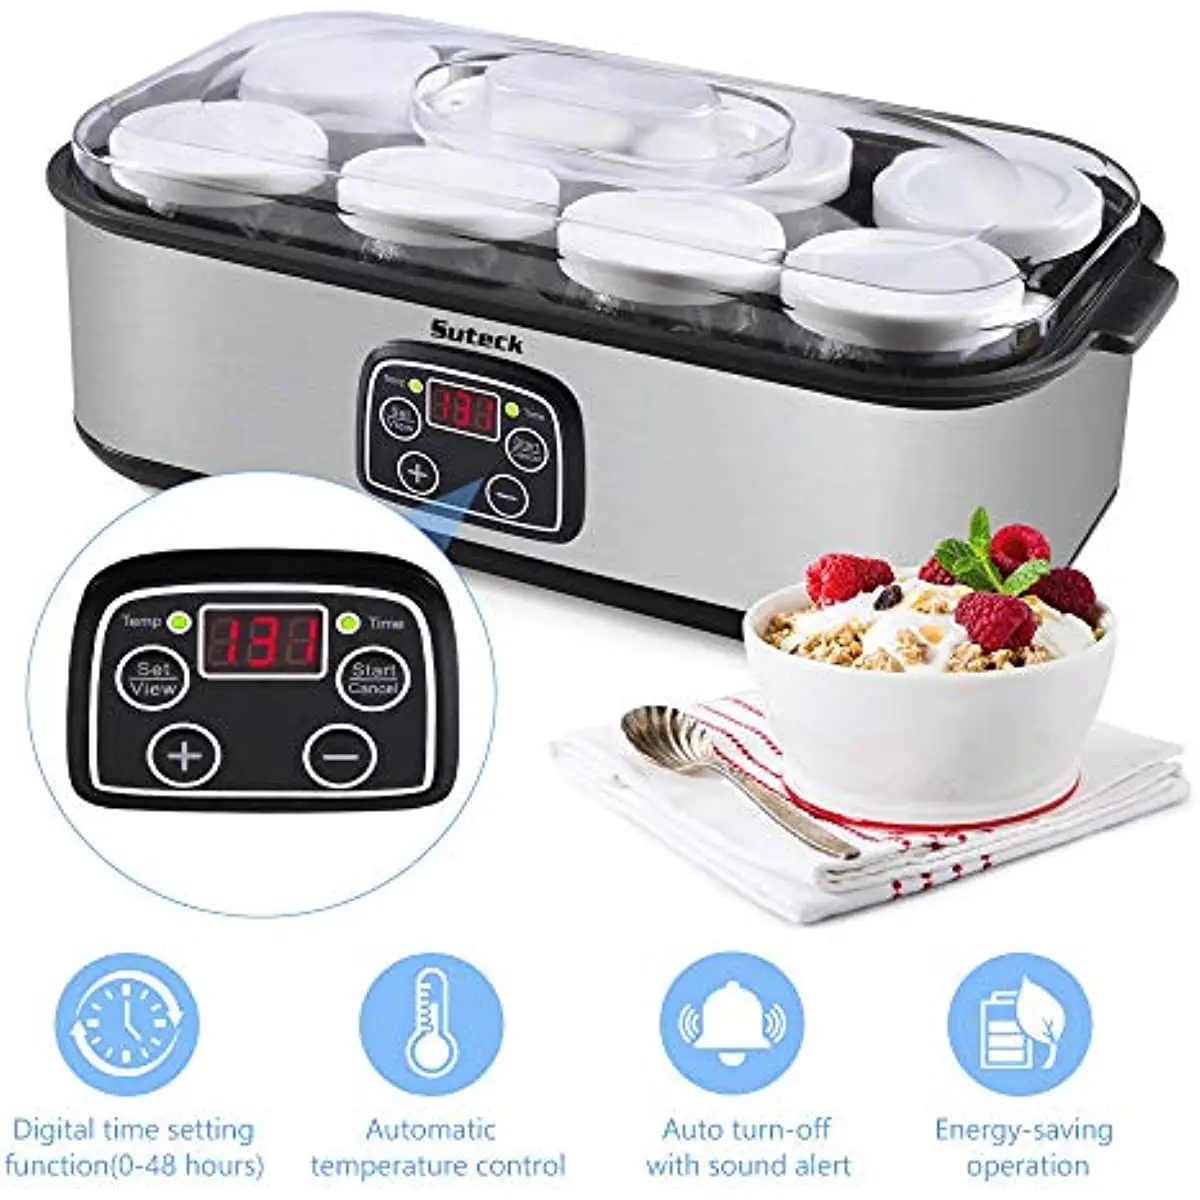 LynTorin Automatic Digital Yogurt Maker Machine with Adjustable Temperature  & Time Control, 8pcs Glass Jars 48 Oz Auto Shut Off - AliExpress